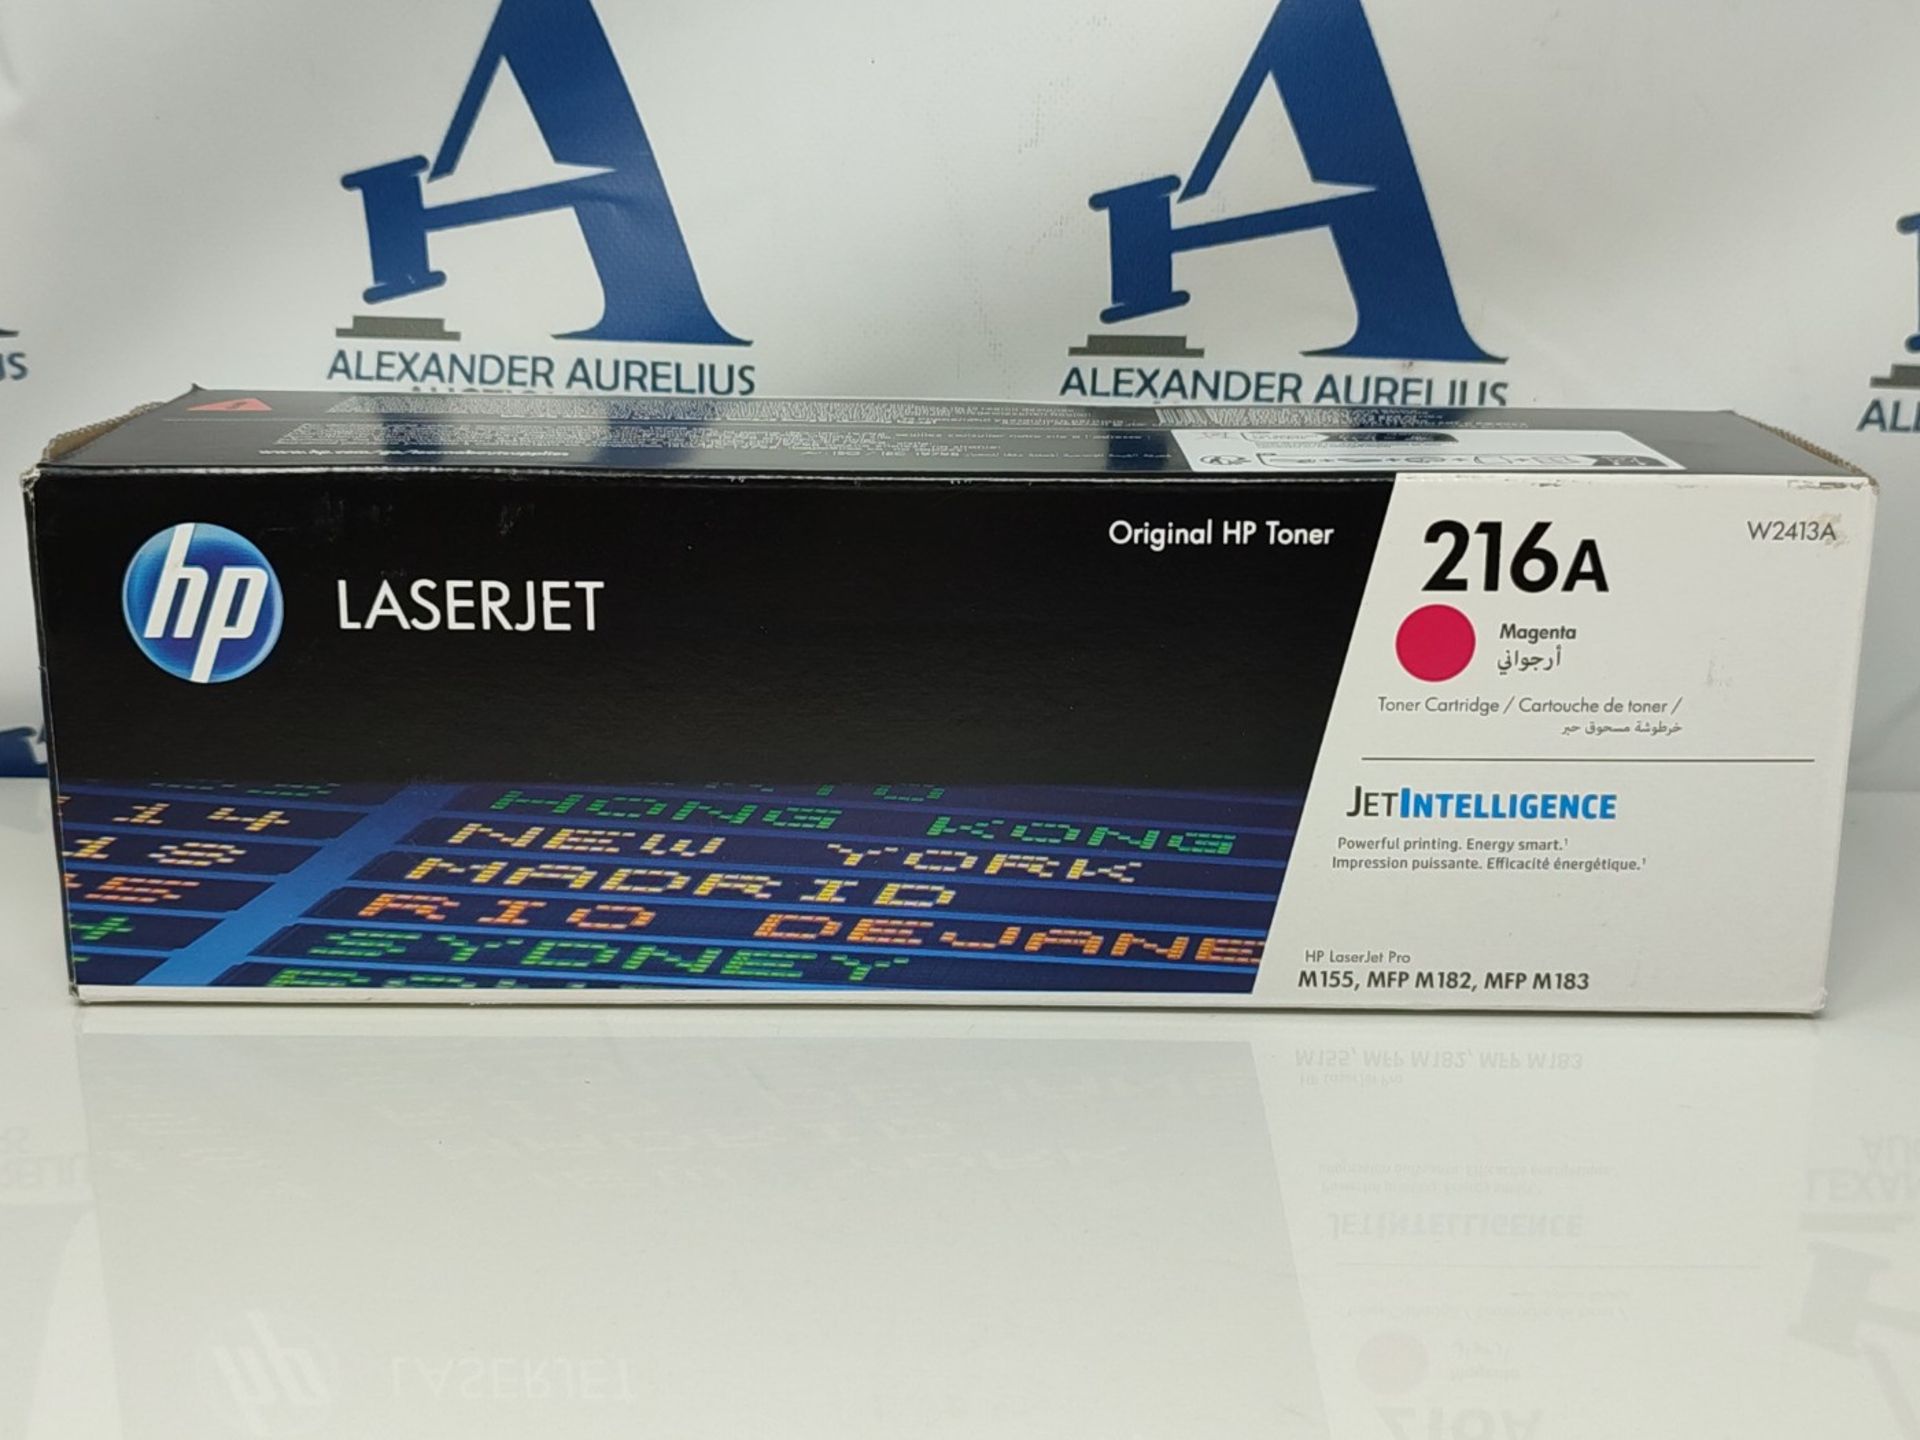 HP W2413A 216A Original LaserJet Toner Cartridge, Magenta, Single Pack - Image 2 of 3